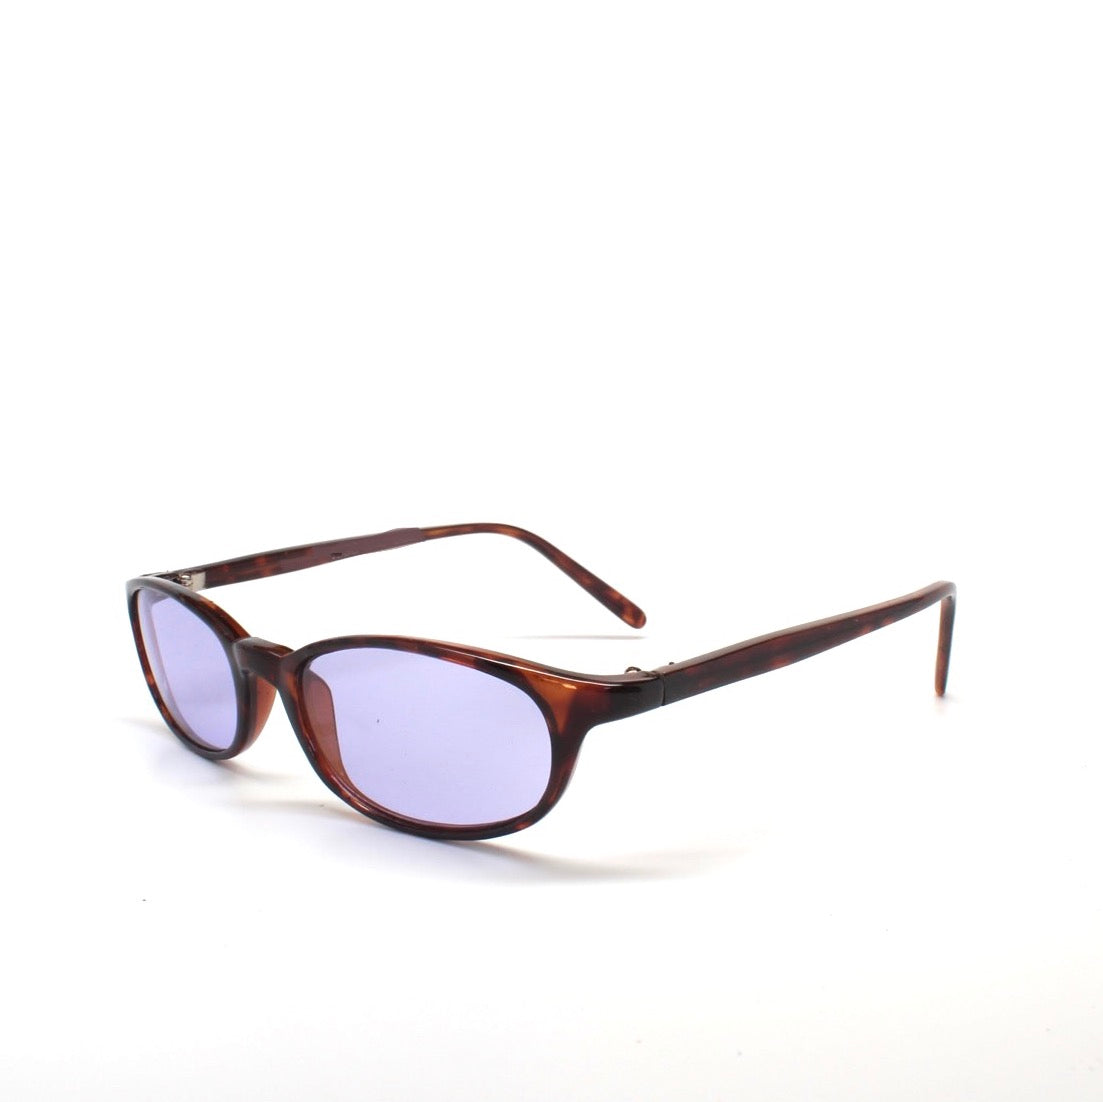 Vintage Small Size Y2k Roxbury Thin Oval Frame Sunglasses - Tortoise Purple